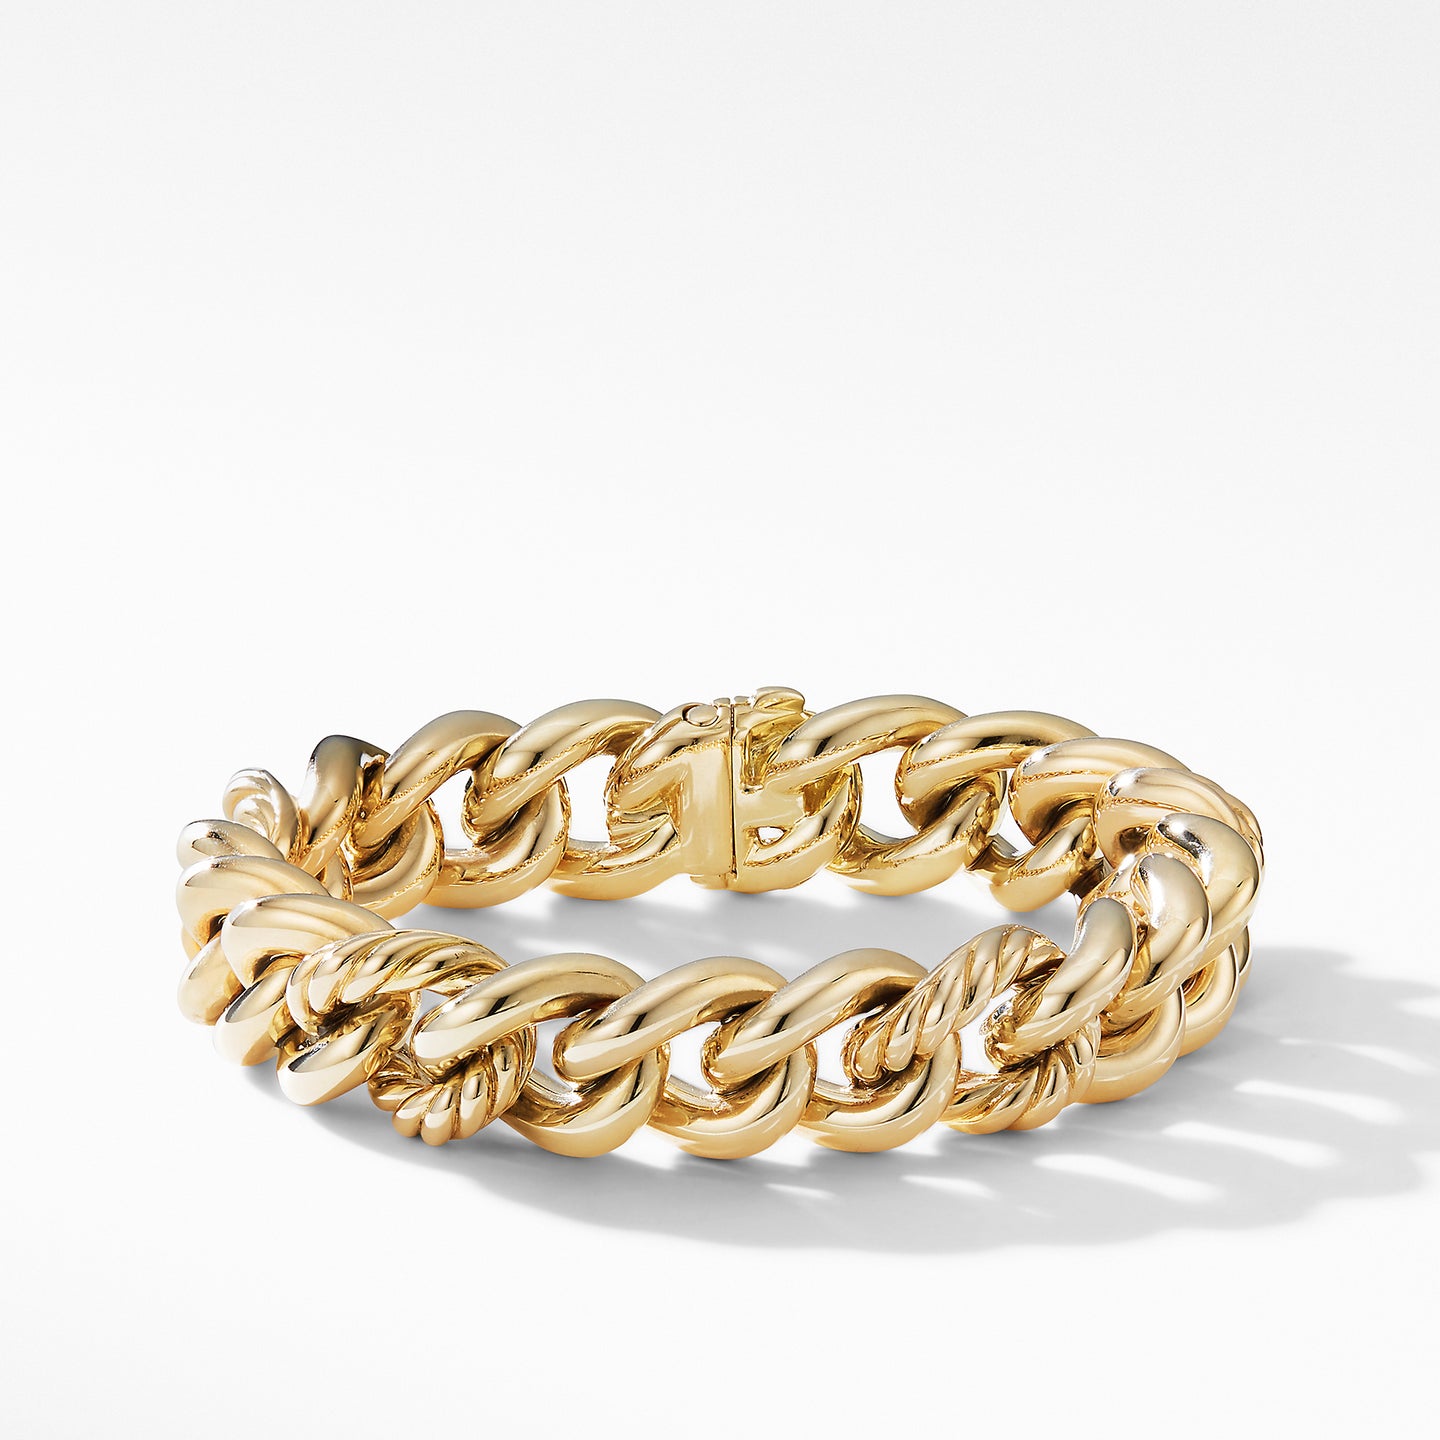 Curb Chain Bracelet in 18K Yellow Gold, Size Medium